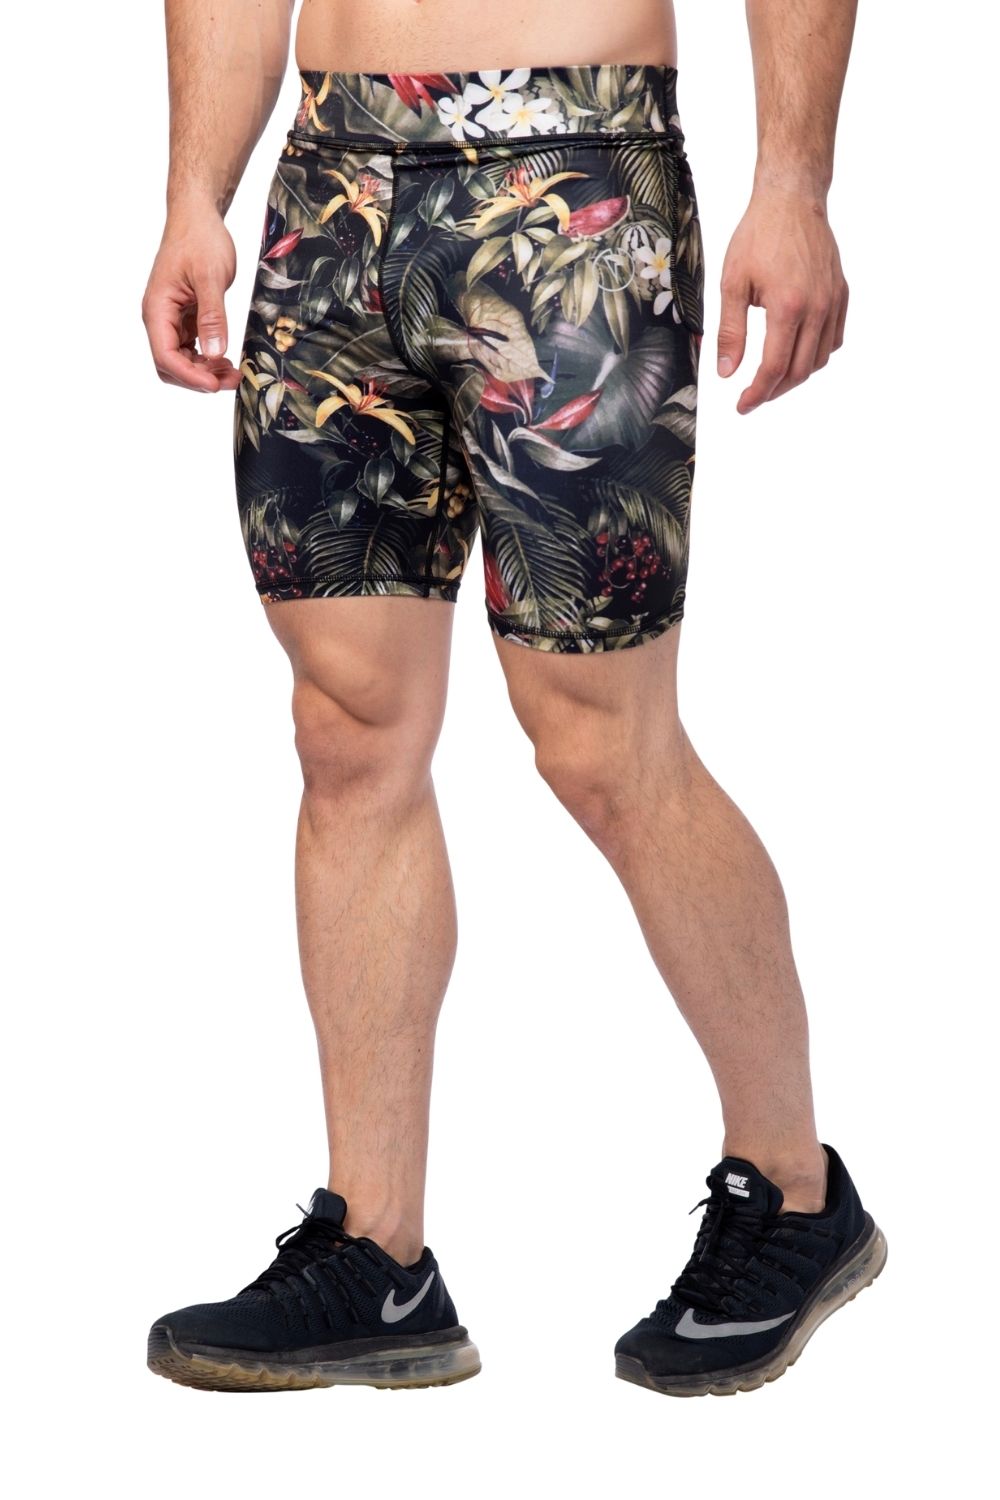 Tarzan Compression Shorts - Kapow Meggings